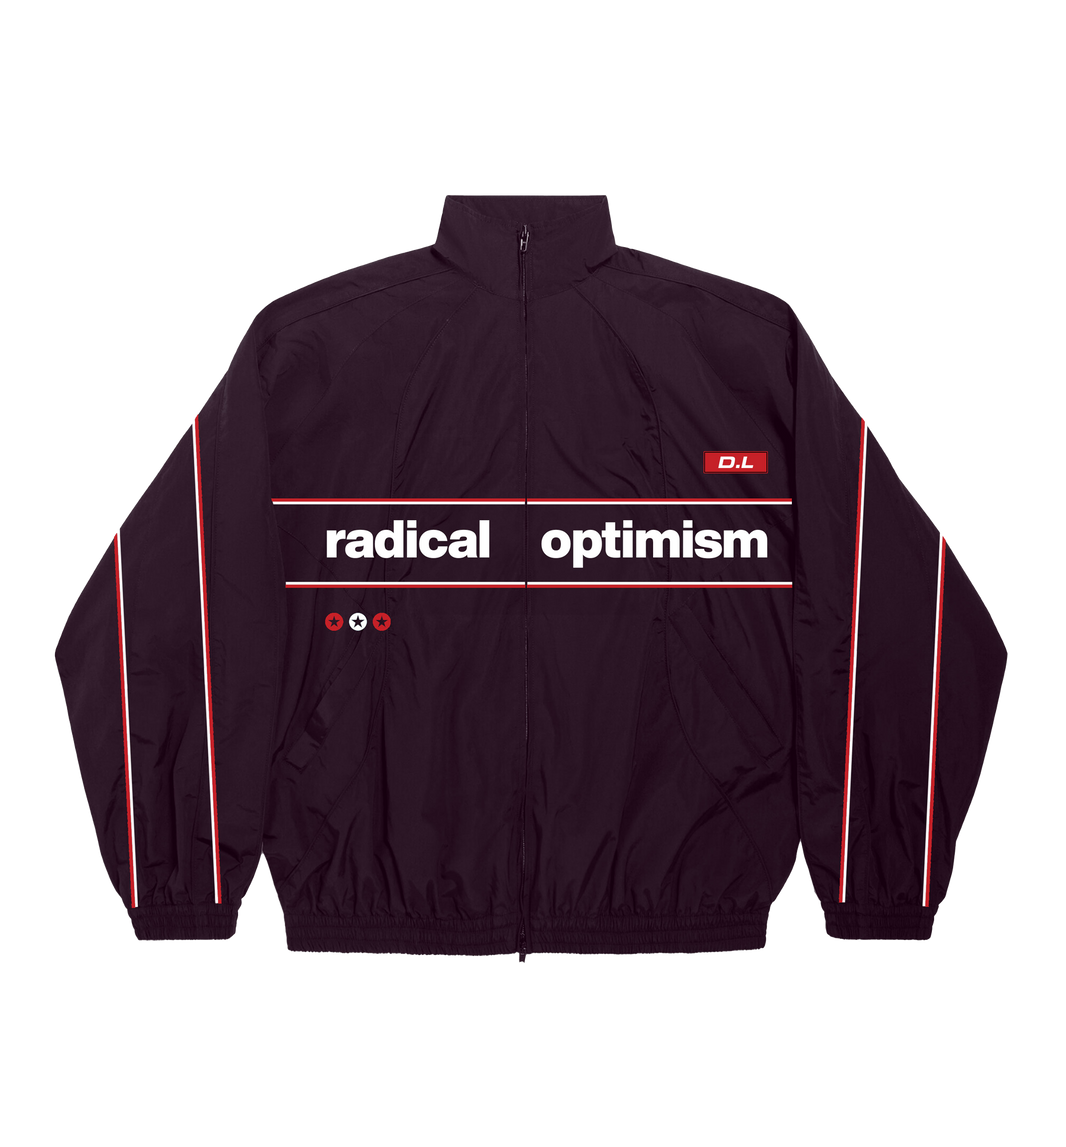 radical optimism burgundy track suit top